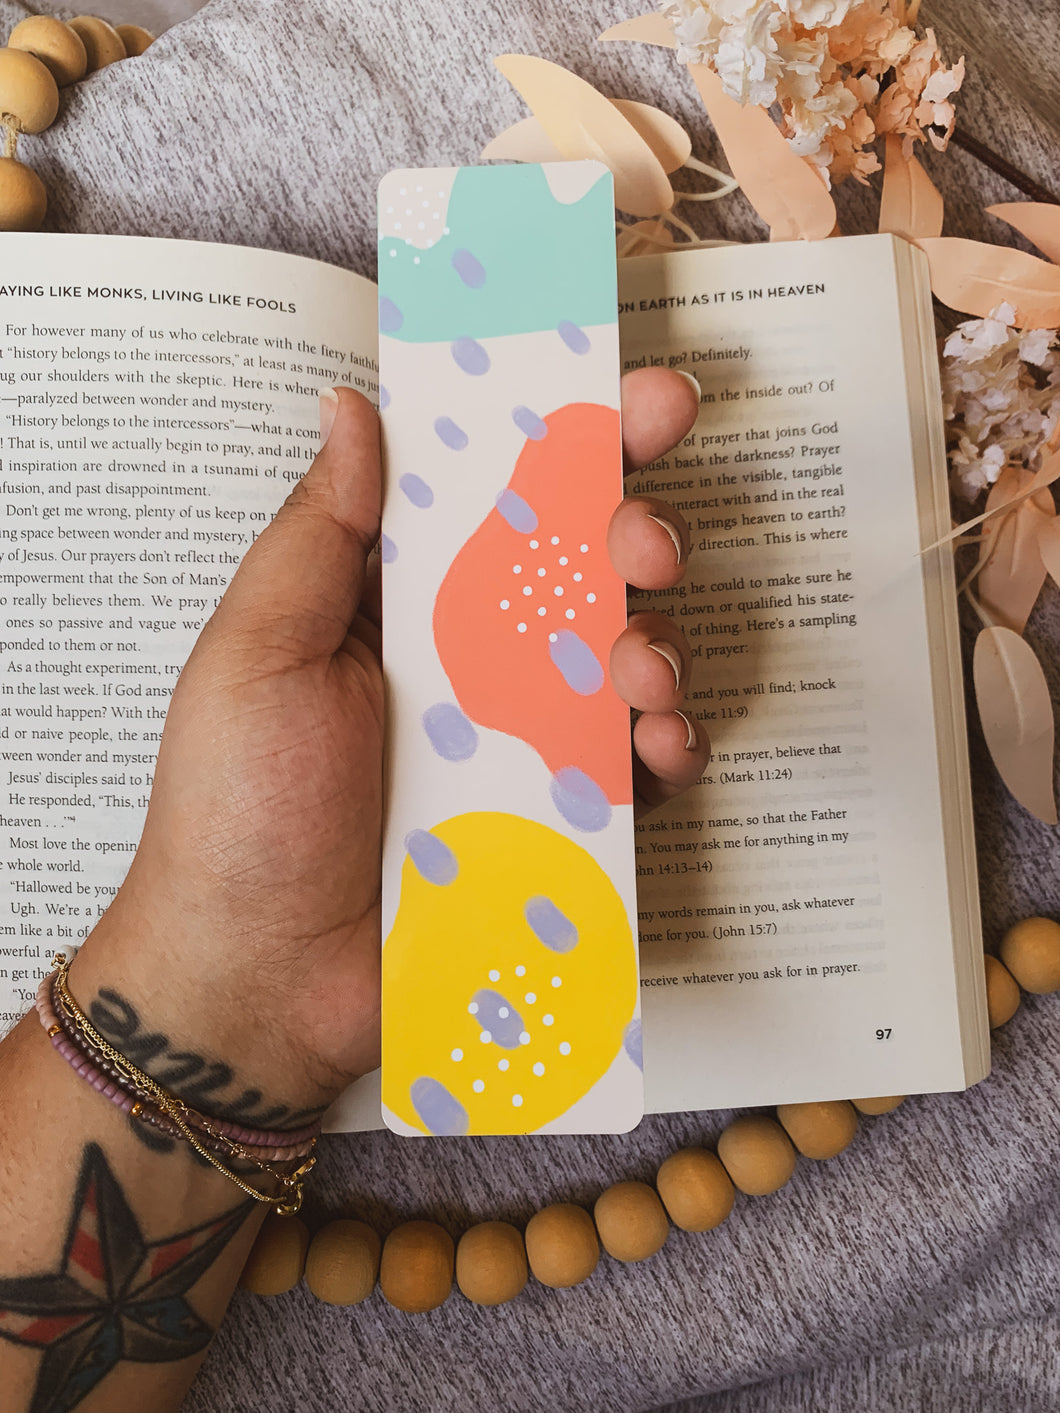 Spring Bookmarks